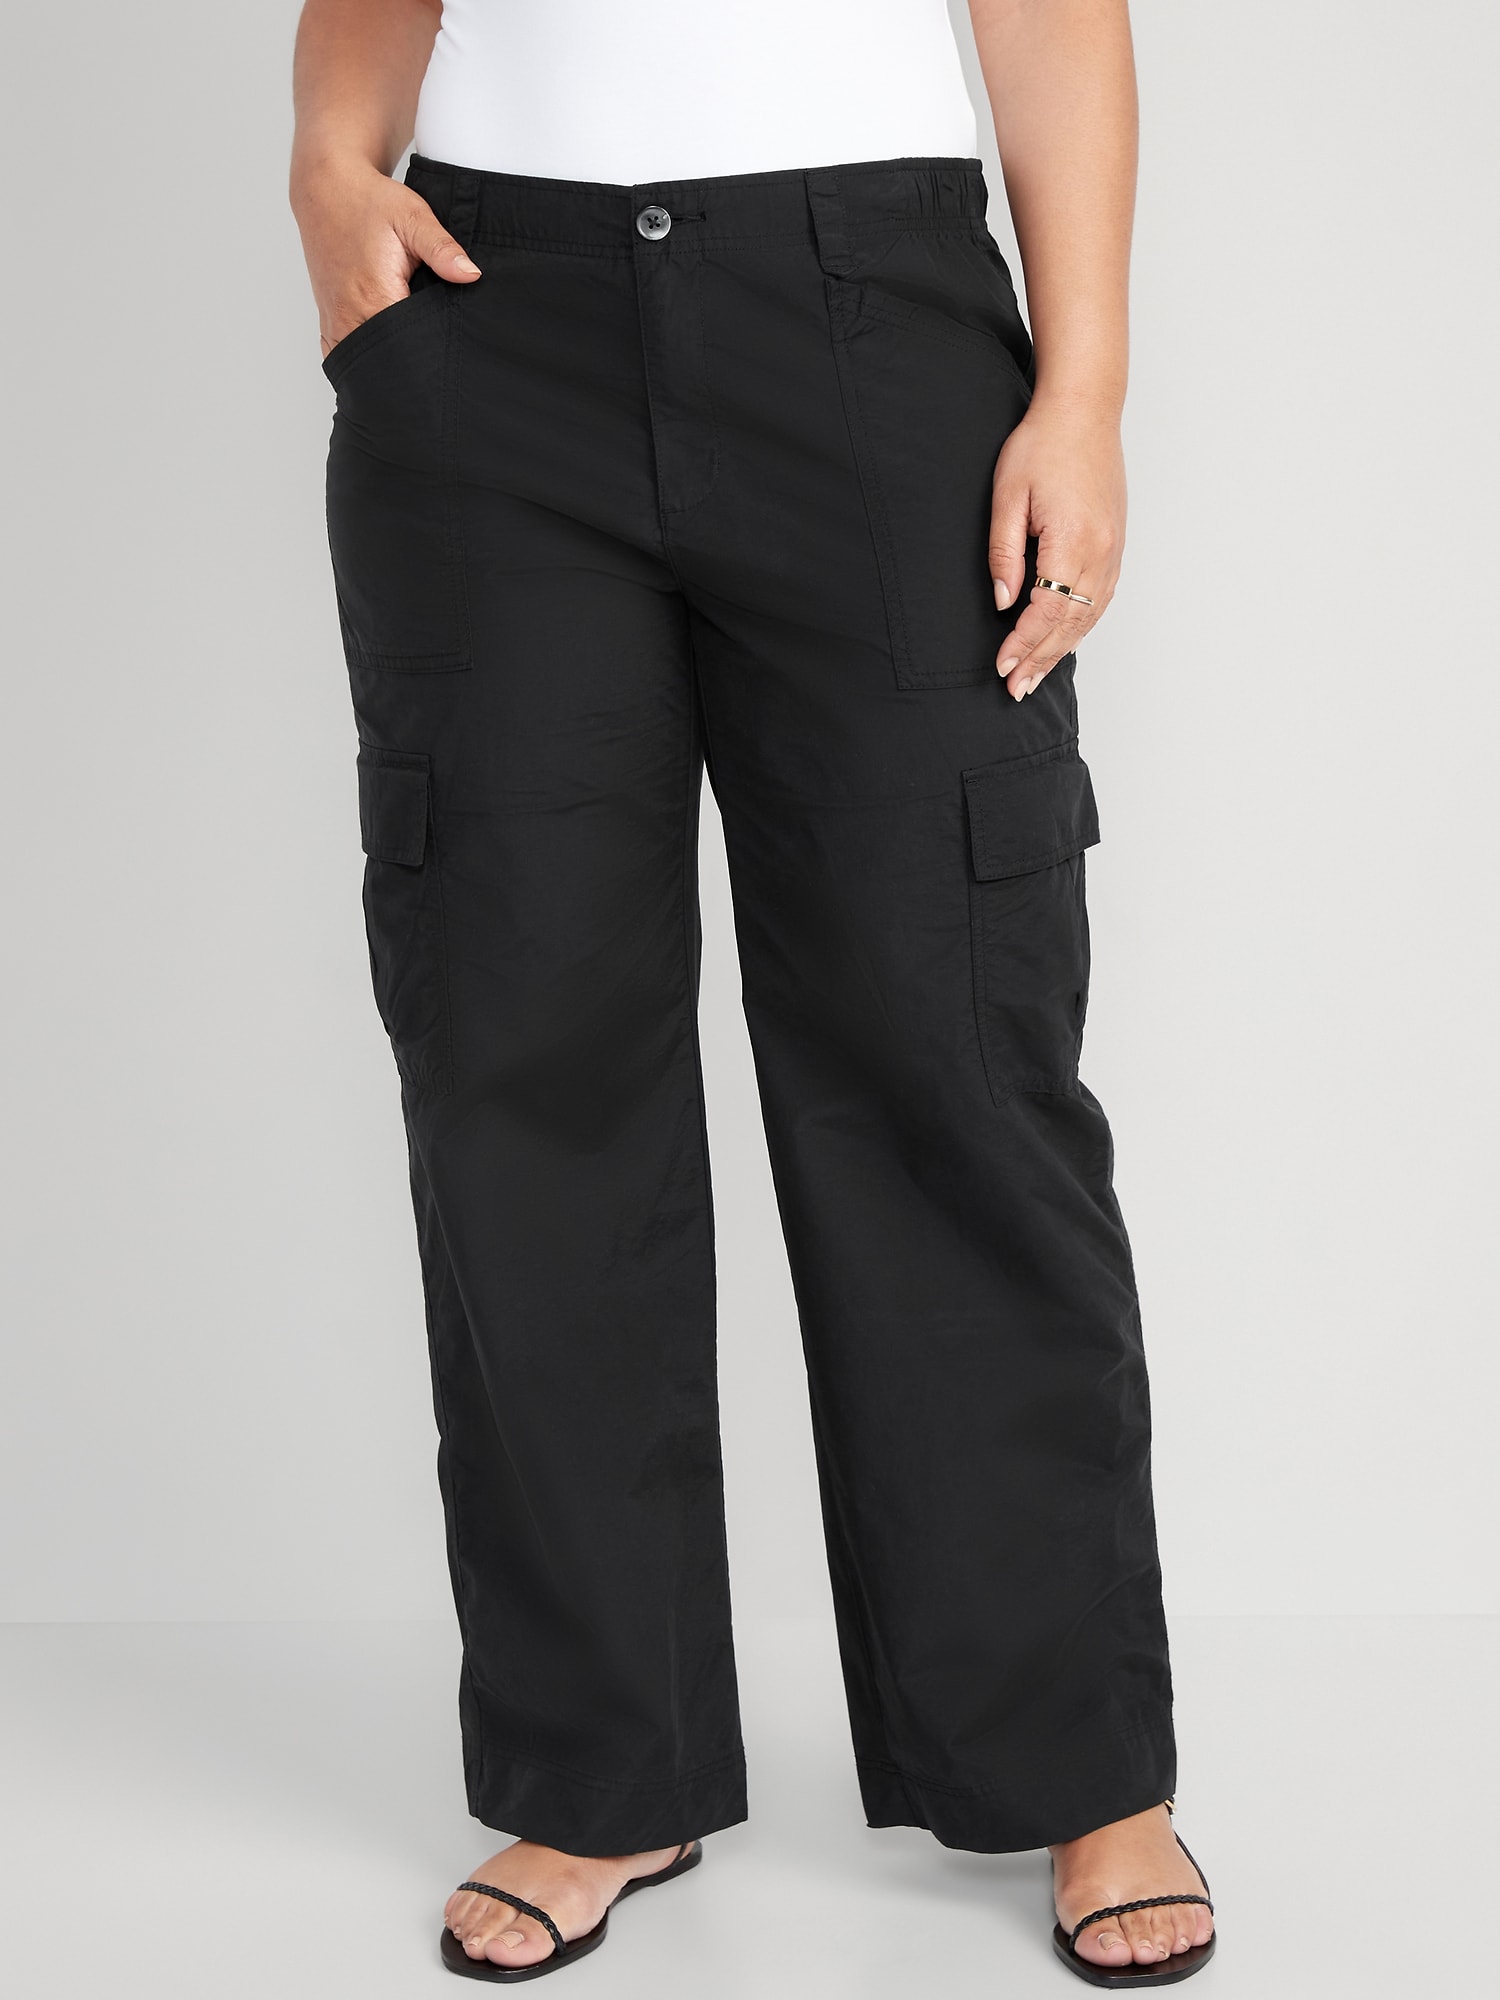 Old Navy Work Linen Pants for Women